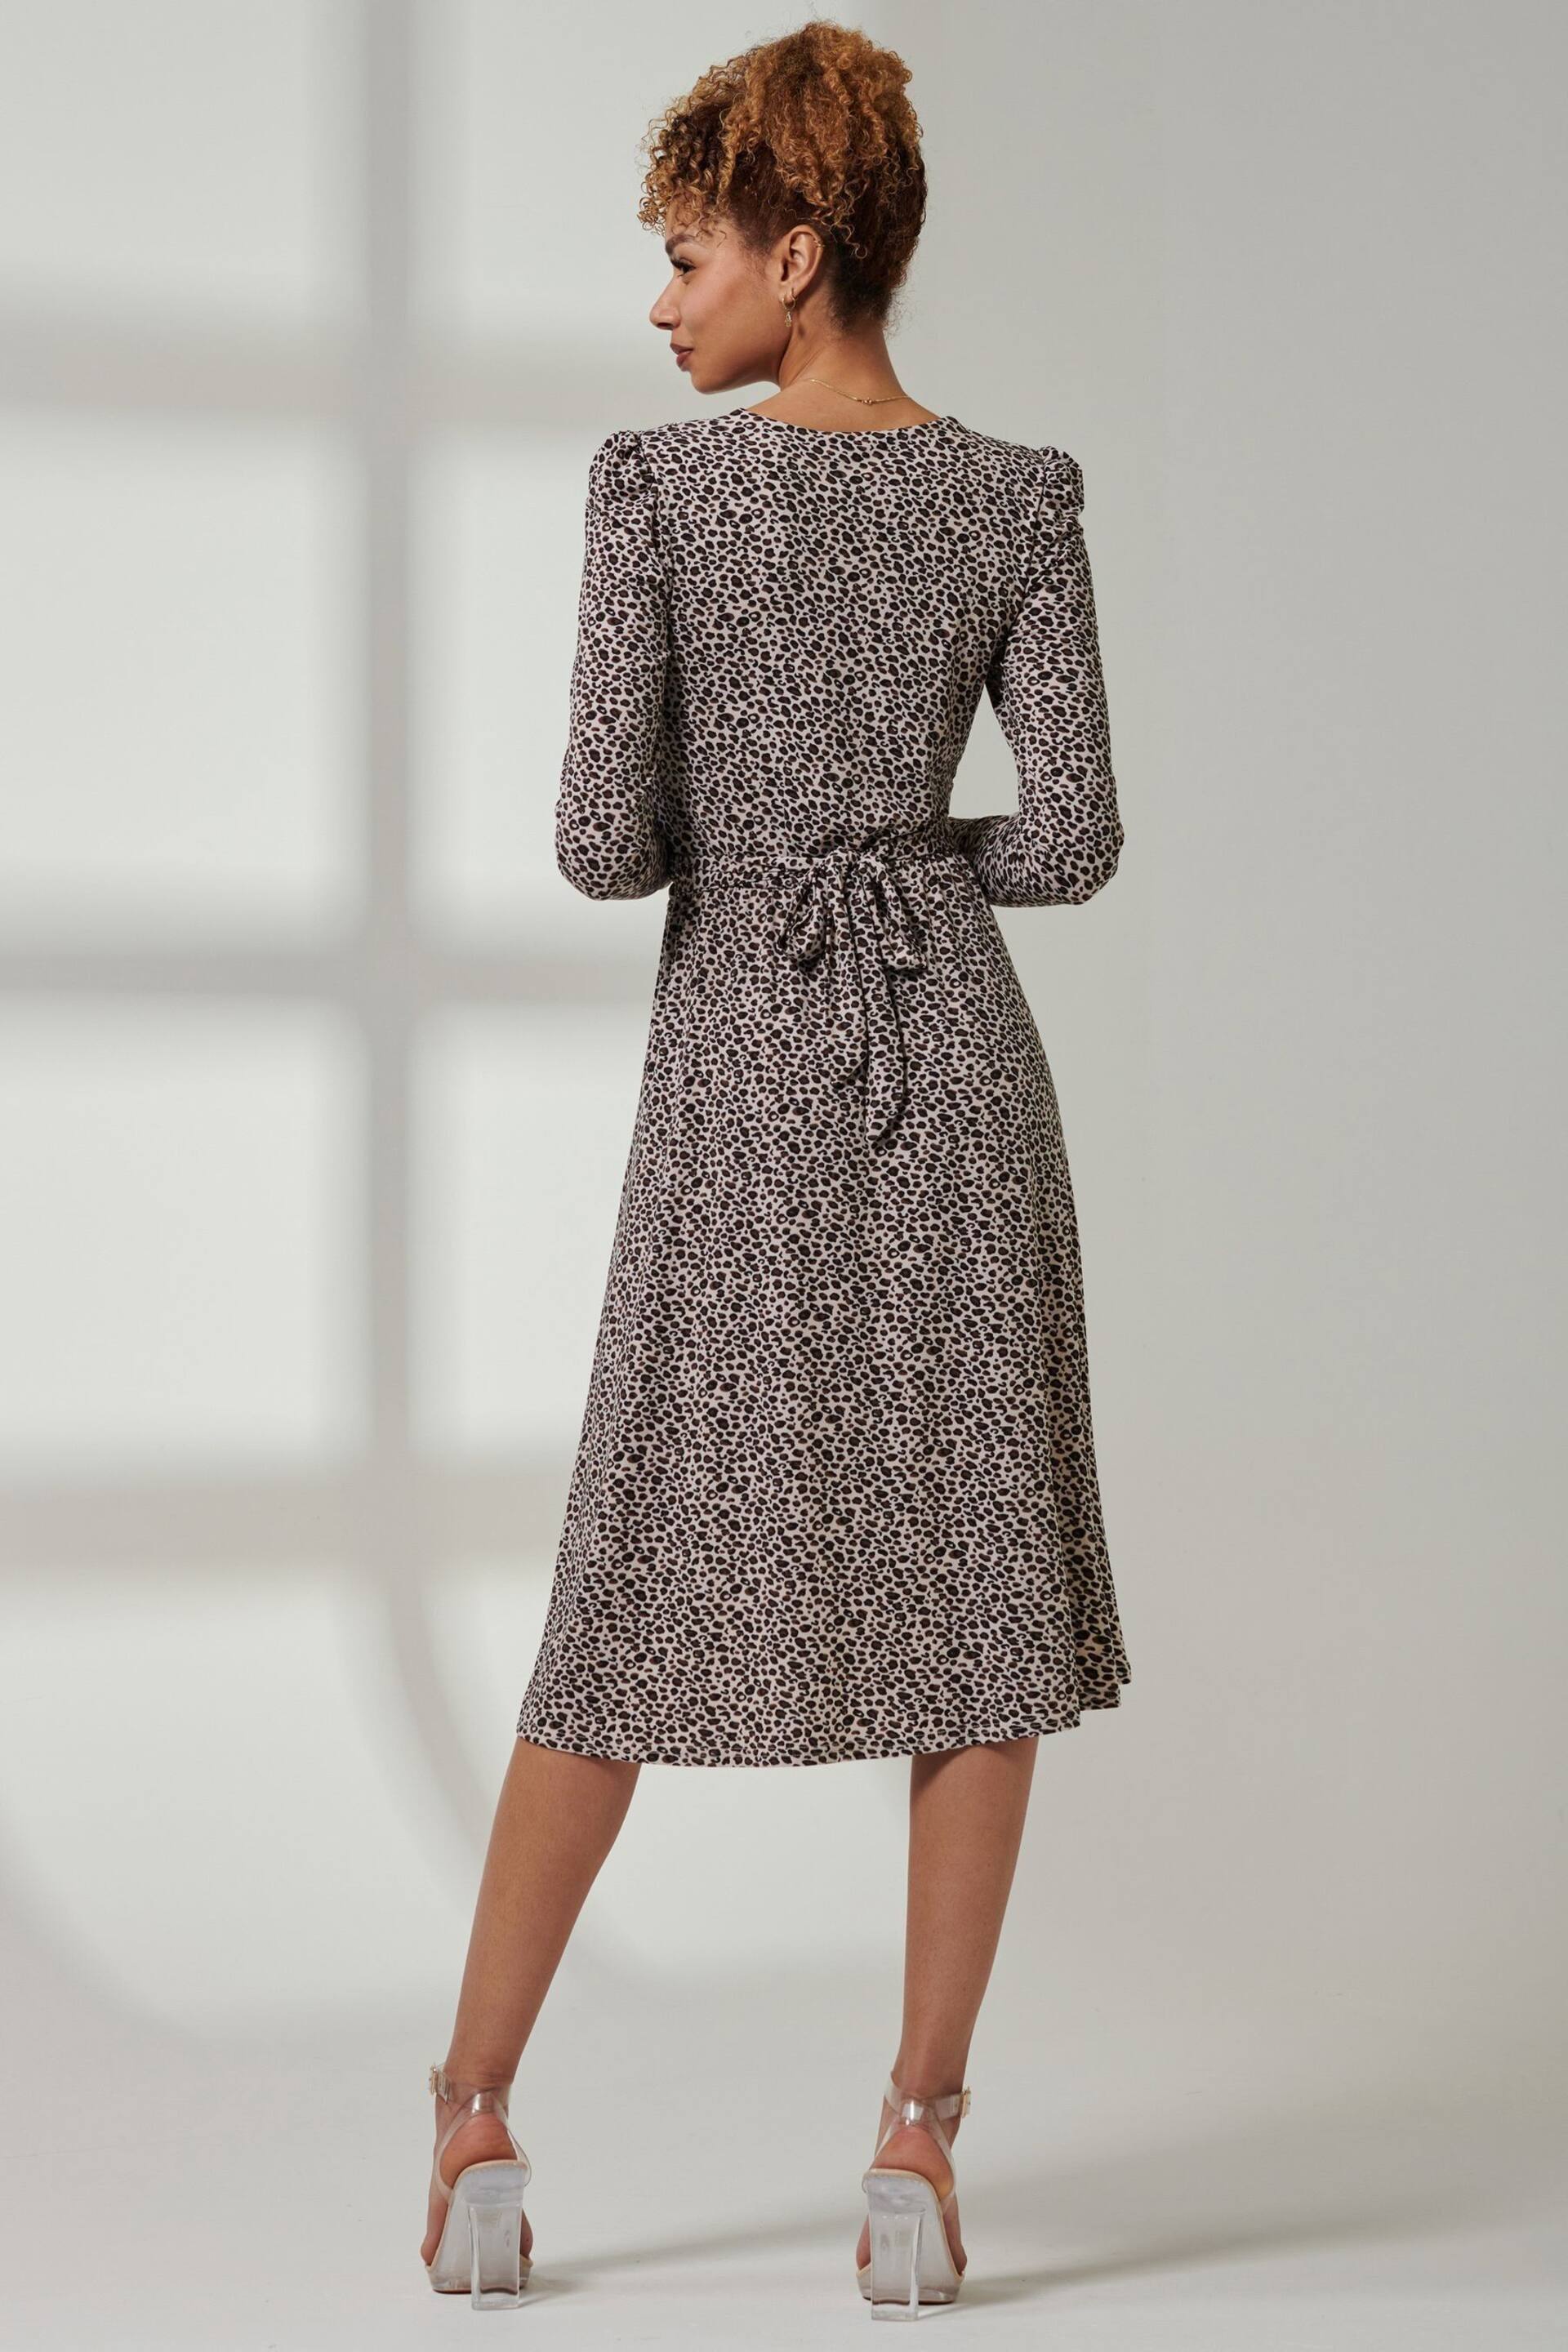 Jolie Moi Animal Print Rafella Long Sleeve Midi Dress - Image 2 of 6